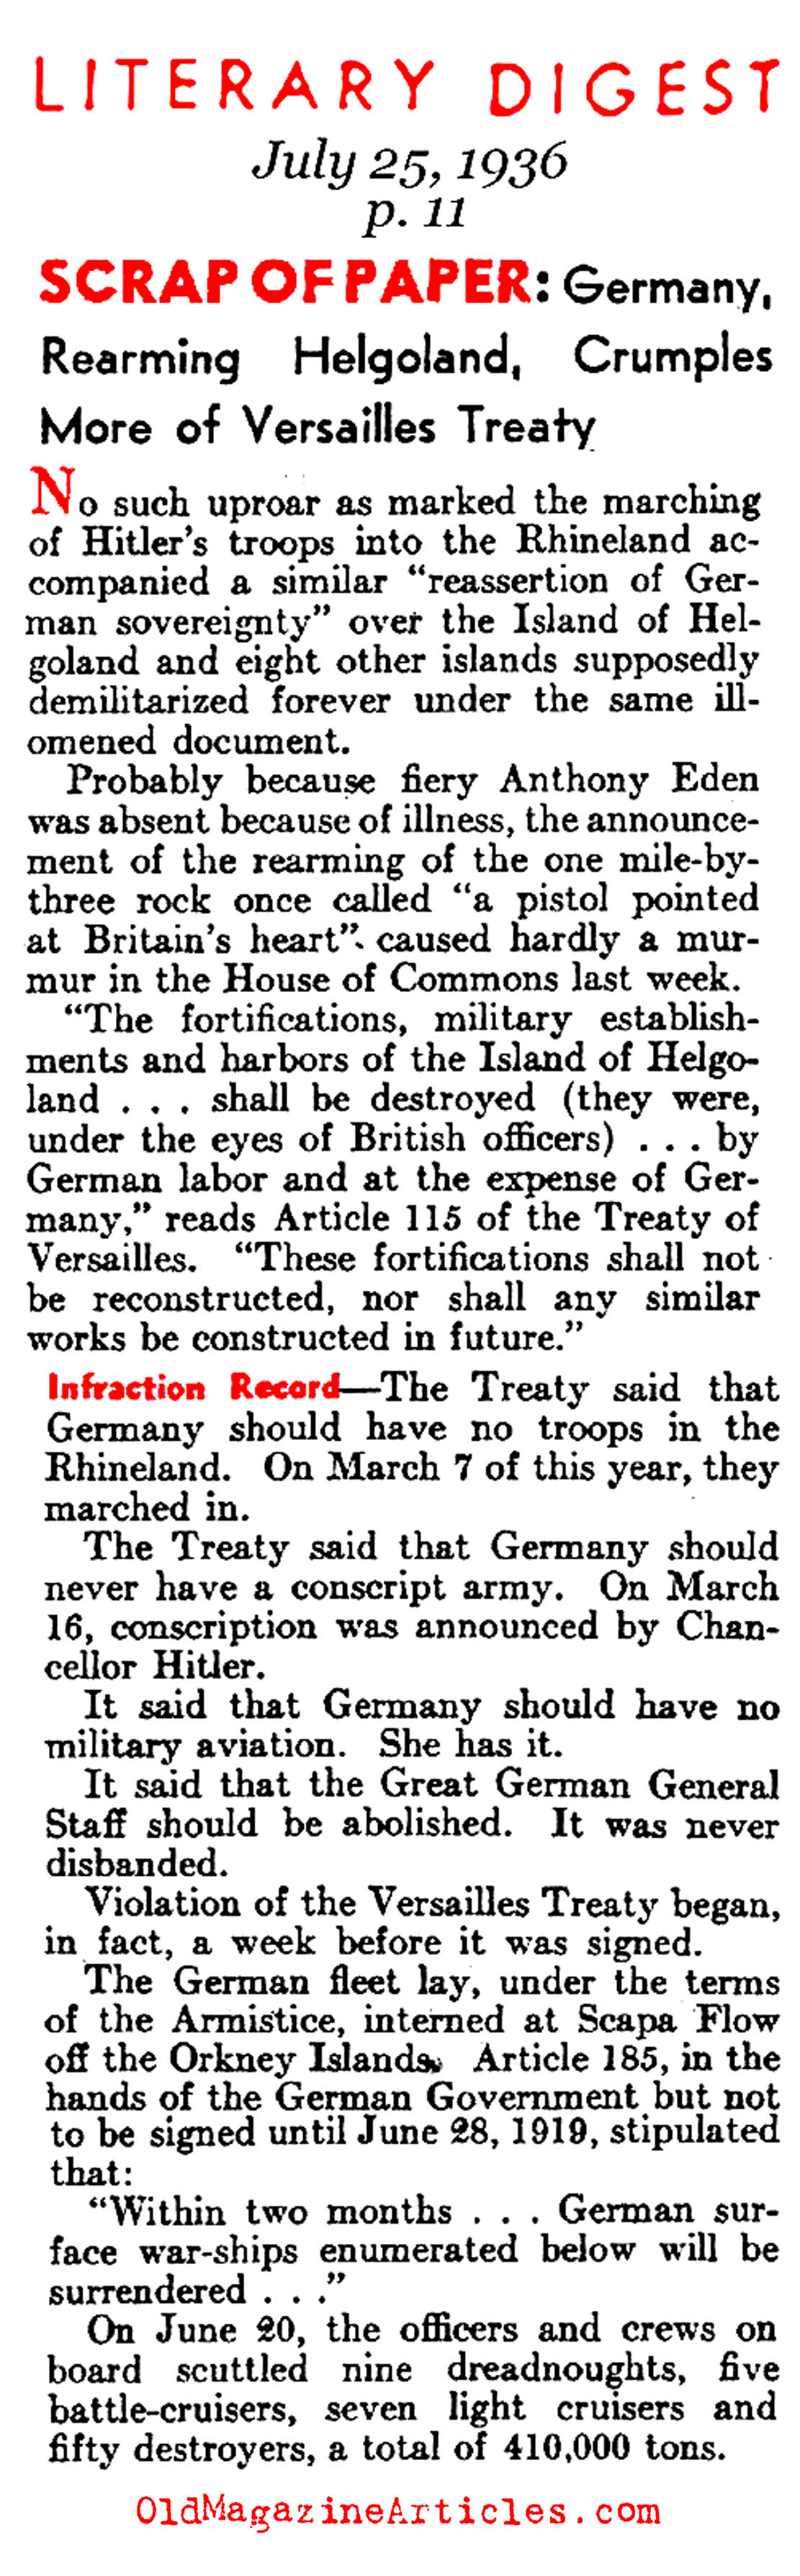 Versailles Treaty Violations (Literary Digest, 1936)